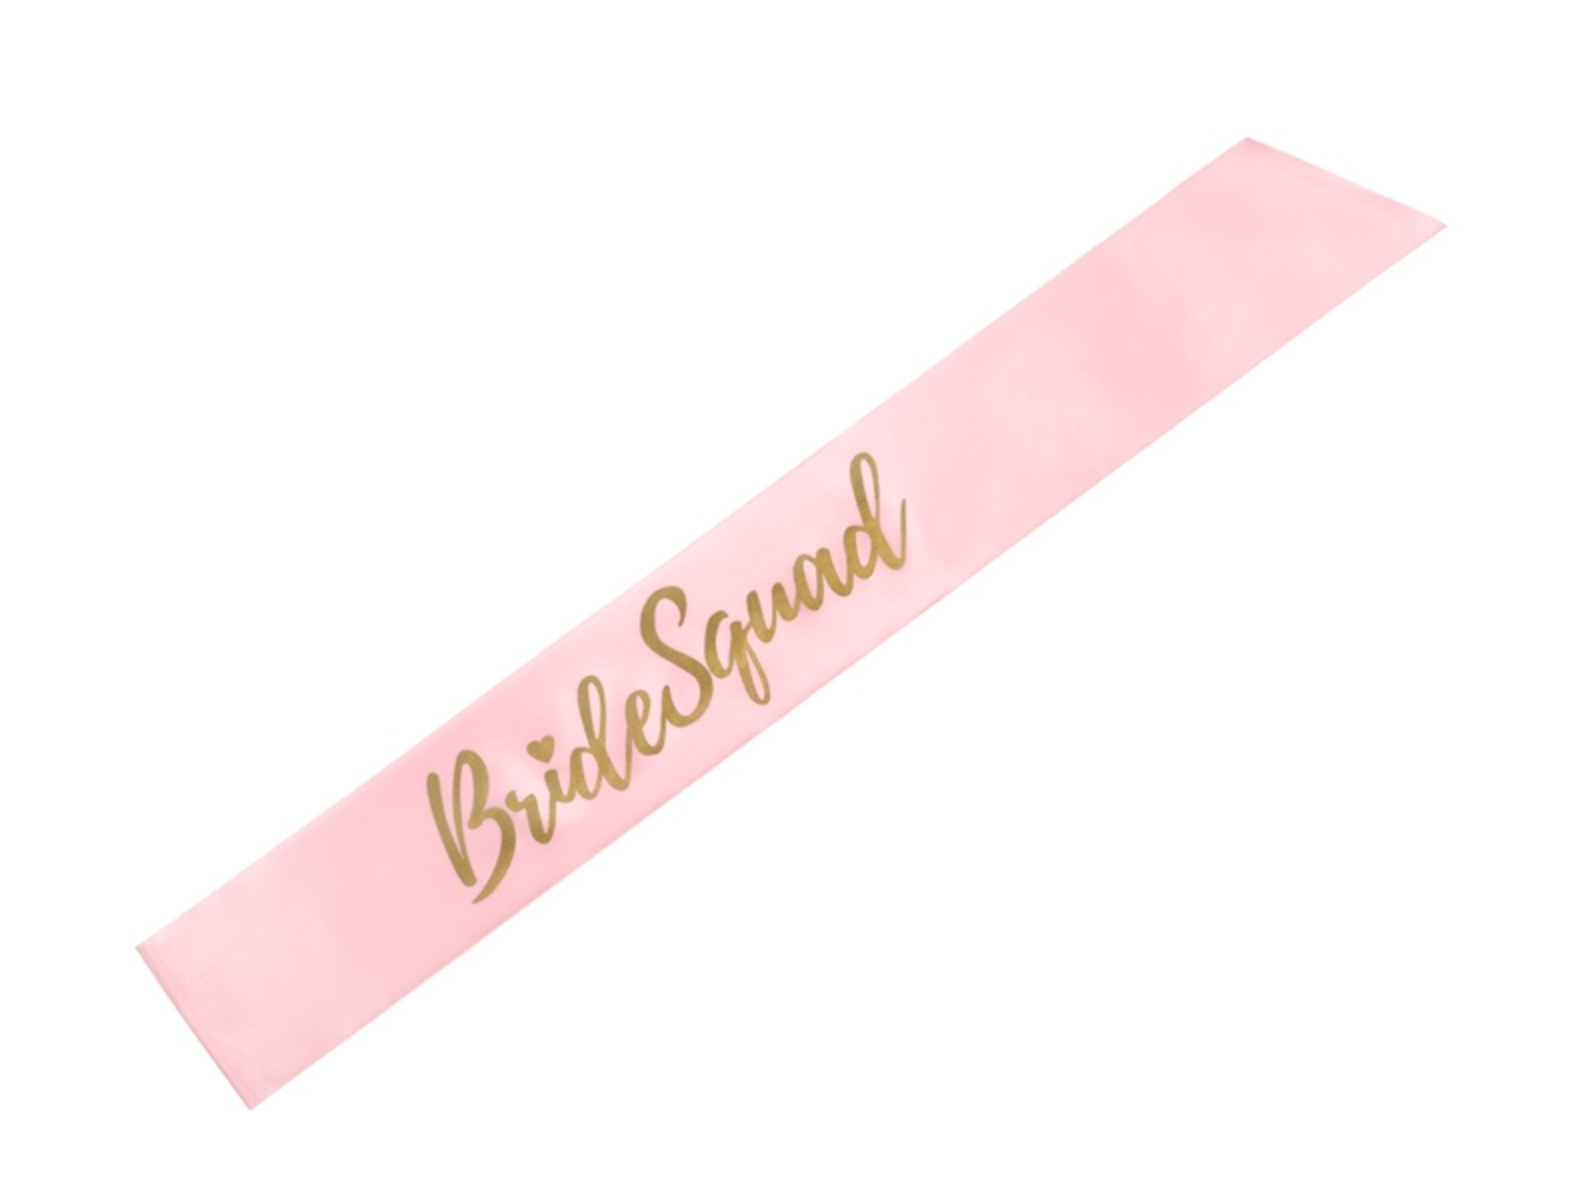 Satinschärpe "Bride Squad" Sash light pink Polterabend 10x75cm